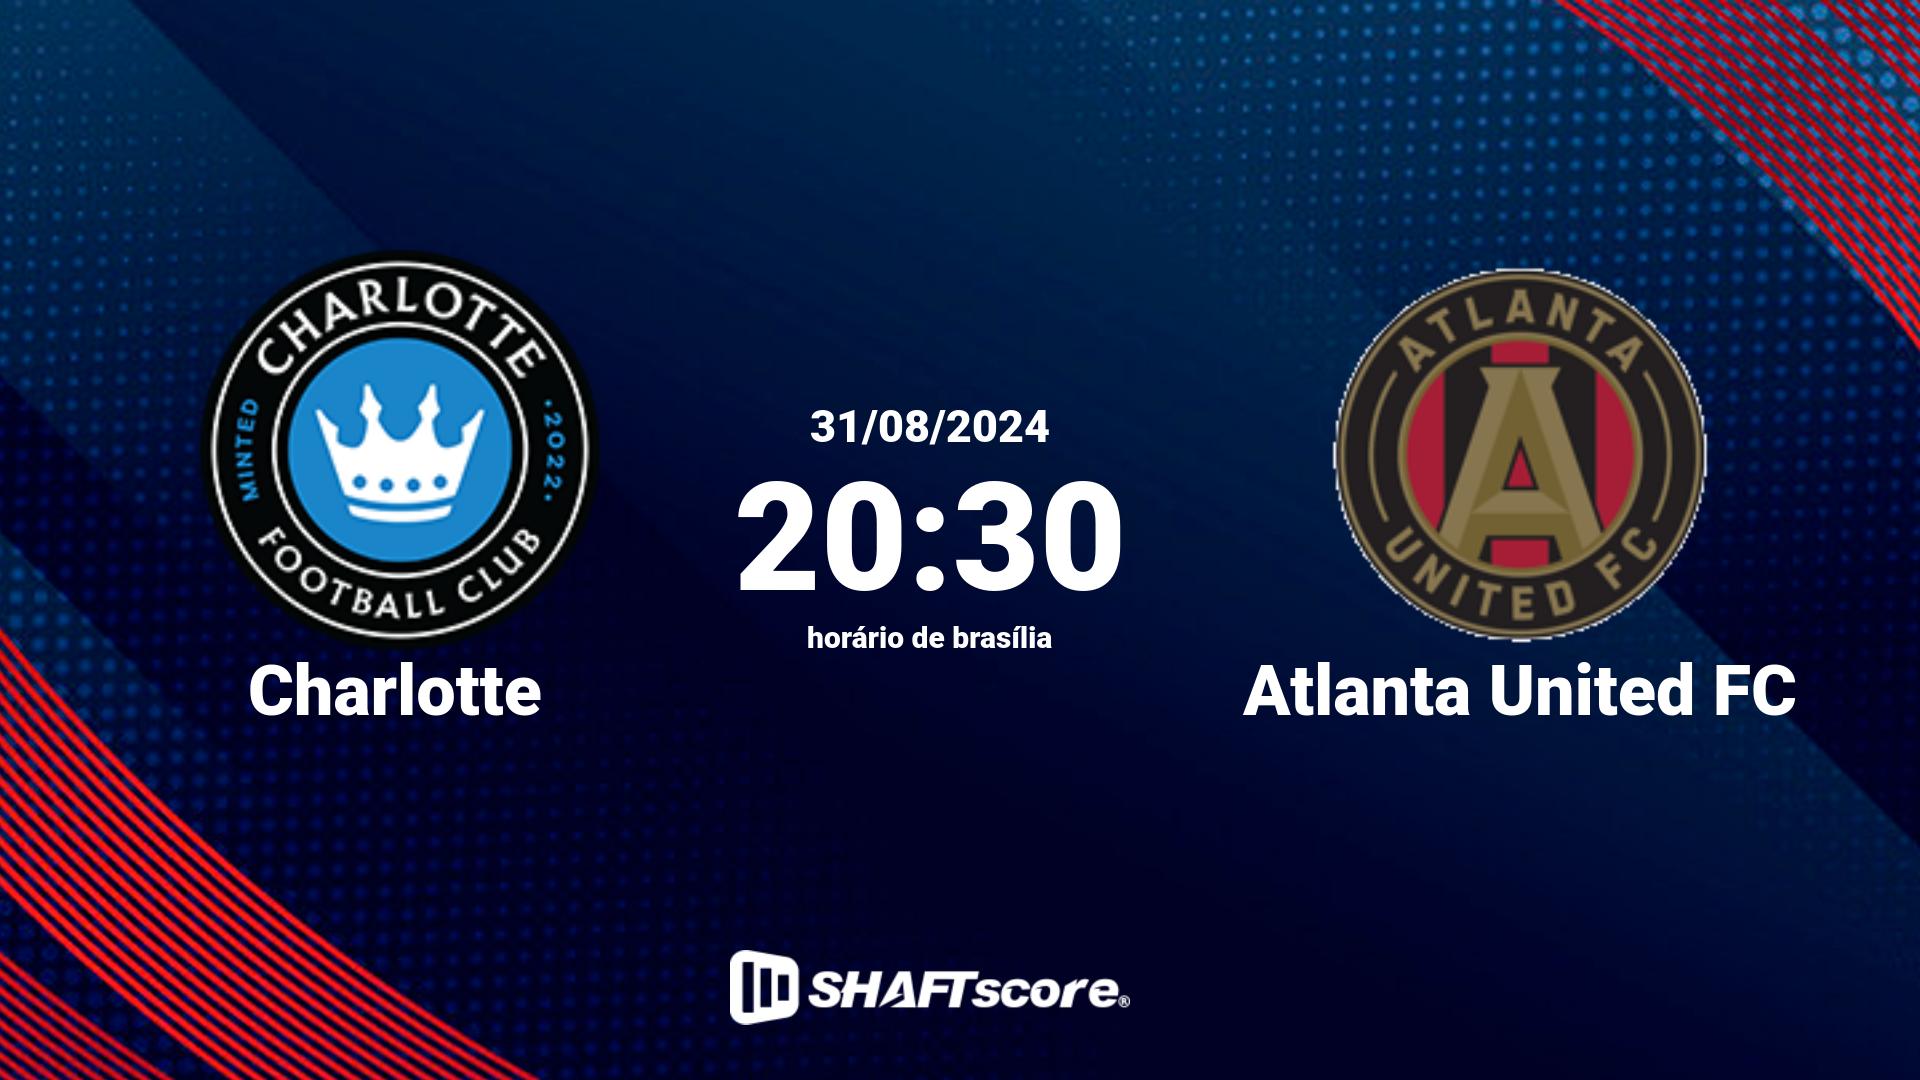 Estatísticas do jogo Charlotte vs Atlanta United FC 31.08 20:30